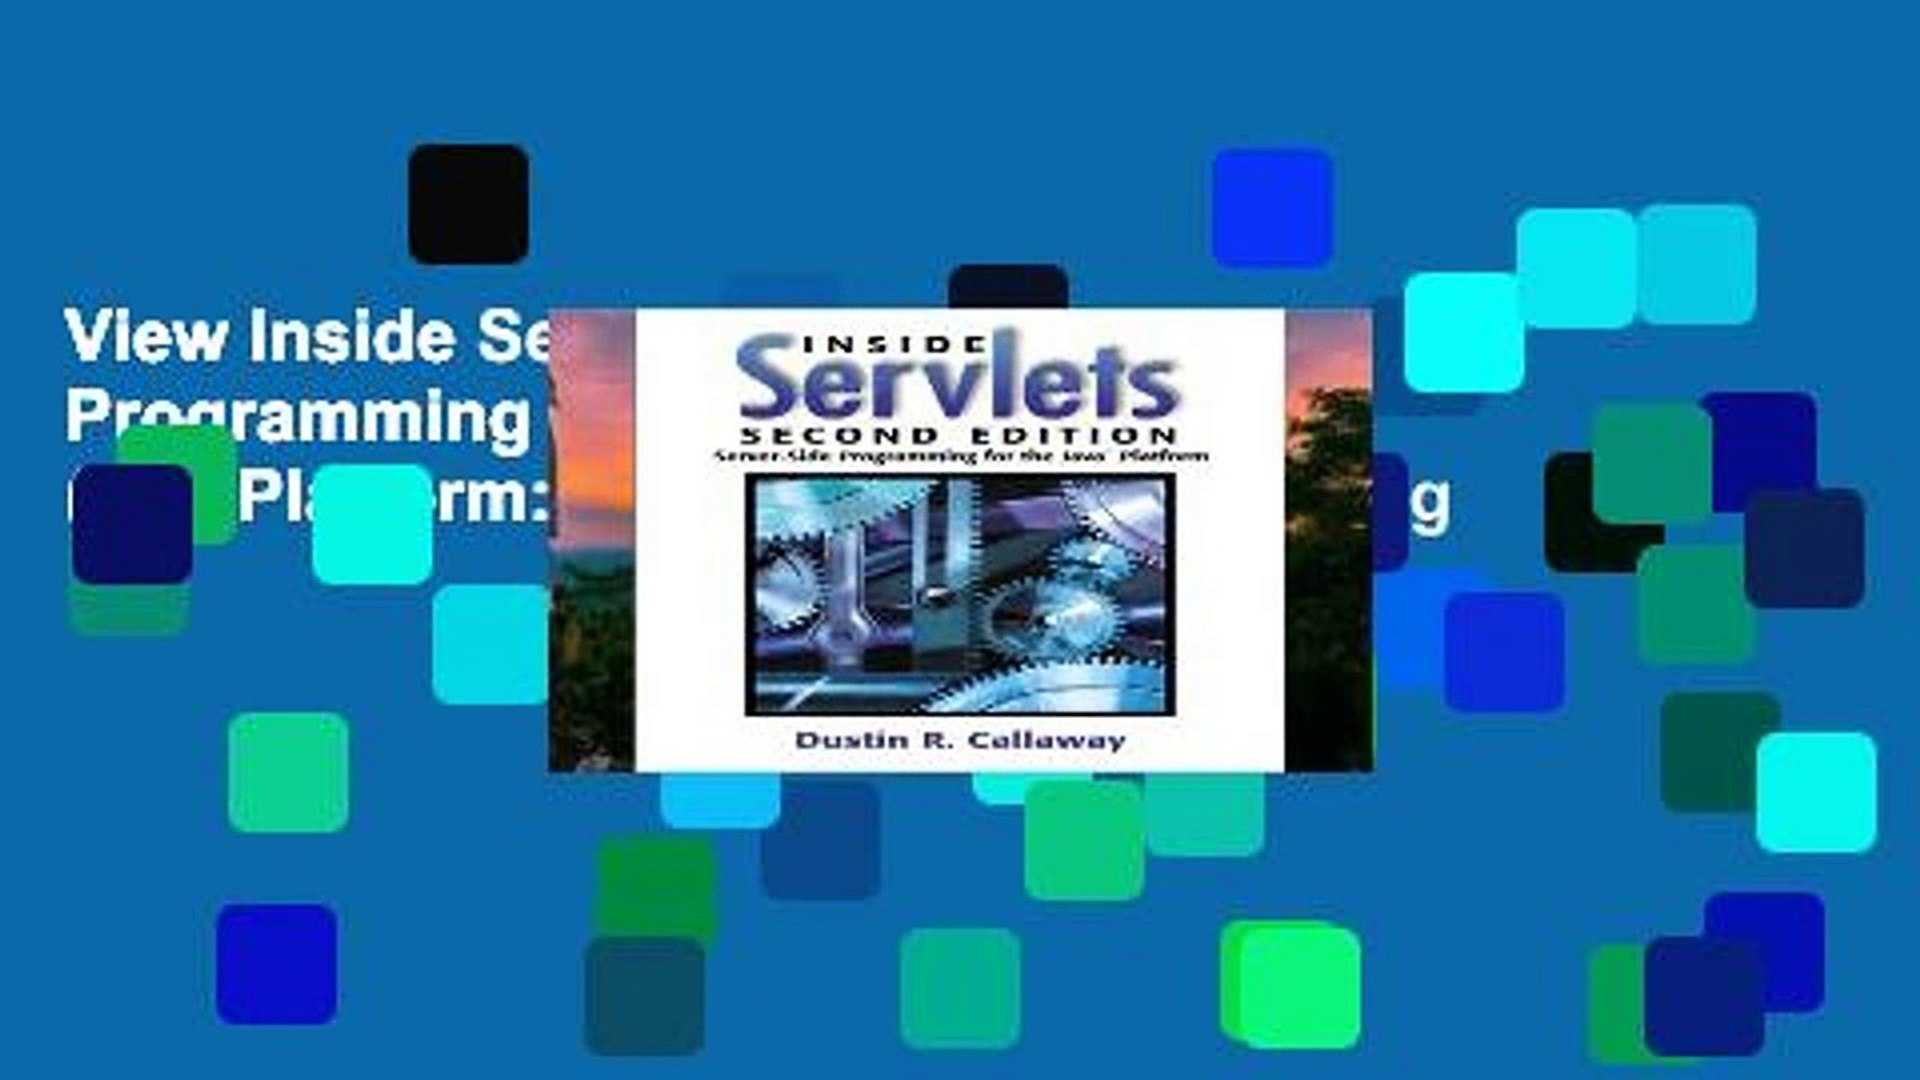 View Inside Servlets: Server-Side Programming for the Java (TM) Platform: Server-side Programming